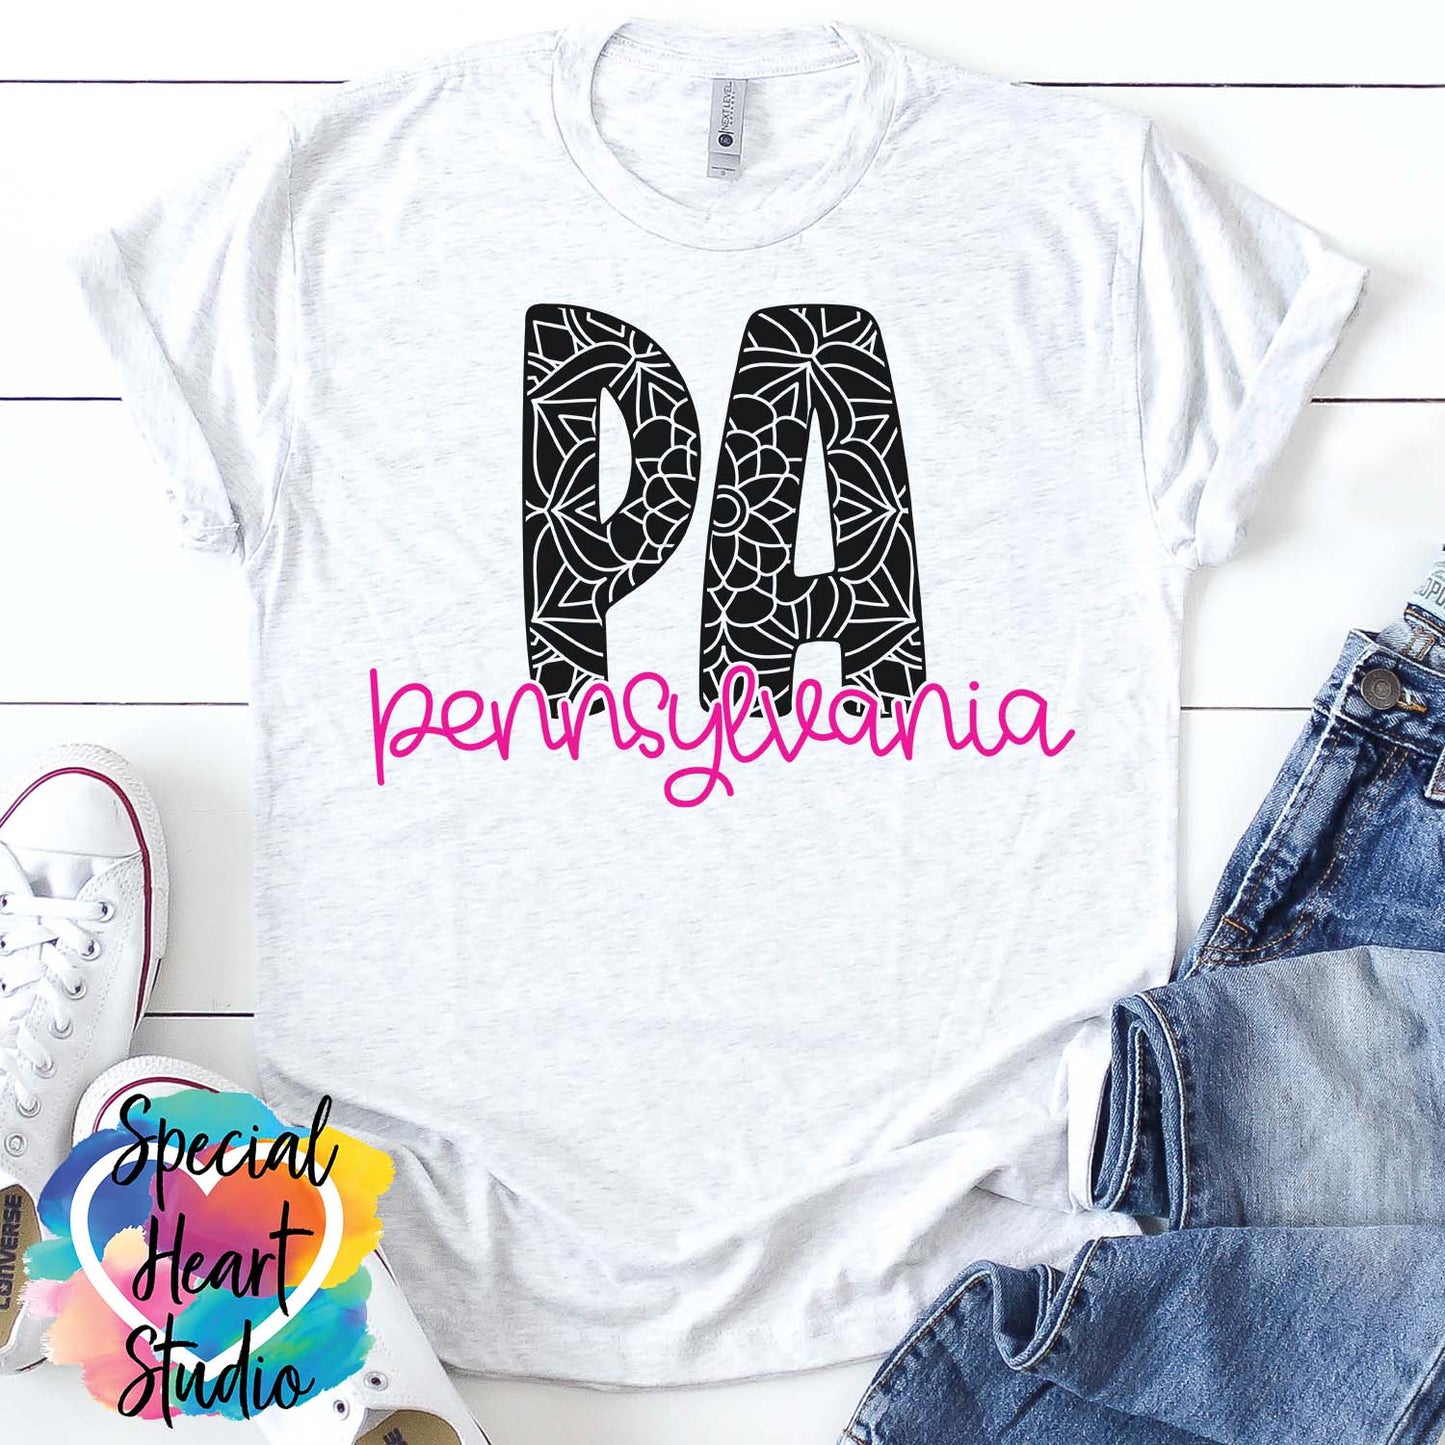 Pennsylvania Mandala SVG shirt mockup